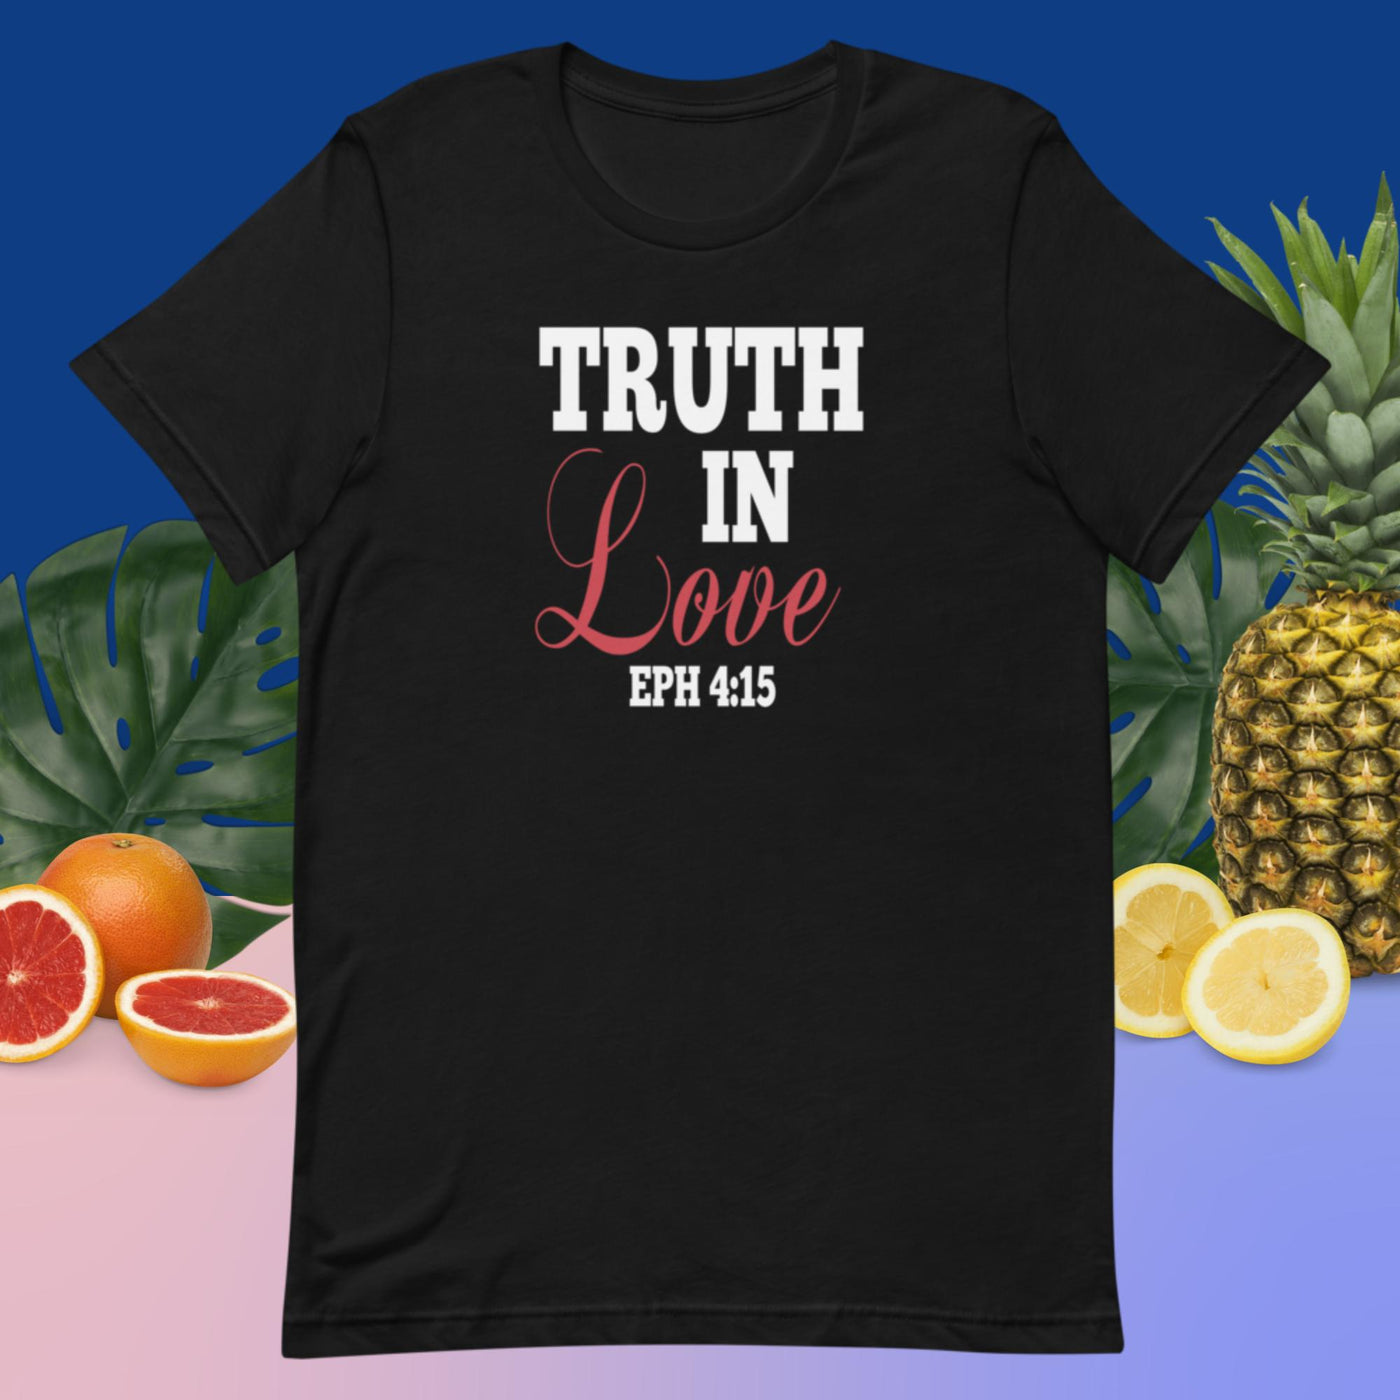 F&H Christian Truth in Love Ephesians 4:15 Womens t-shirt